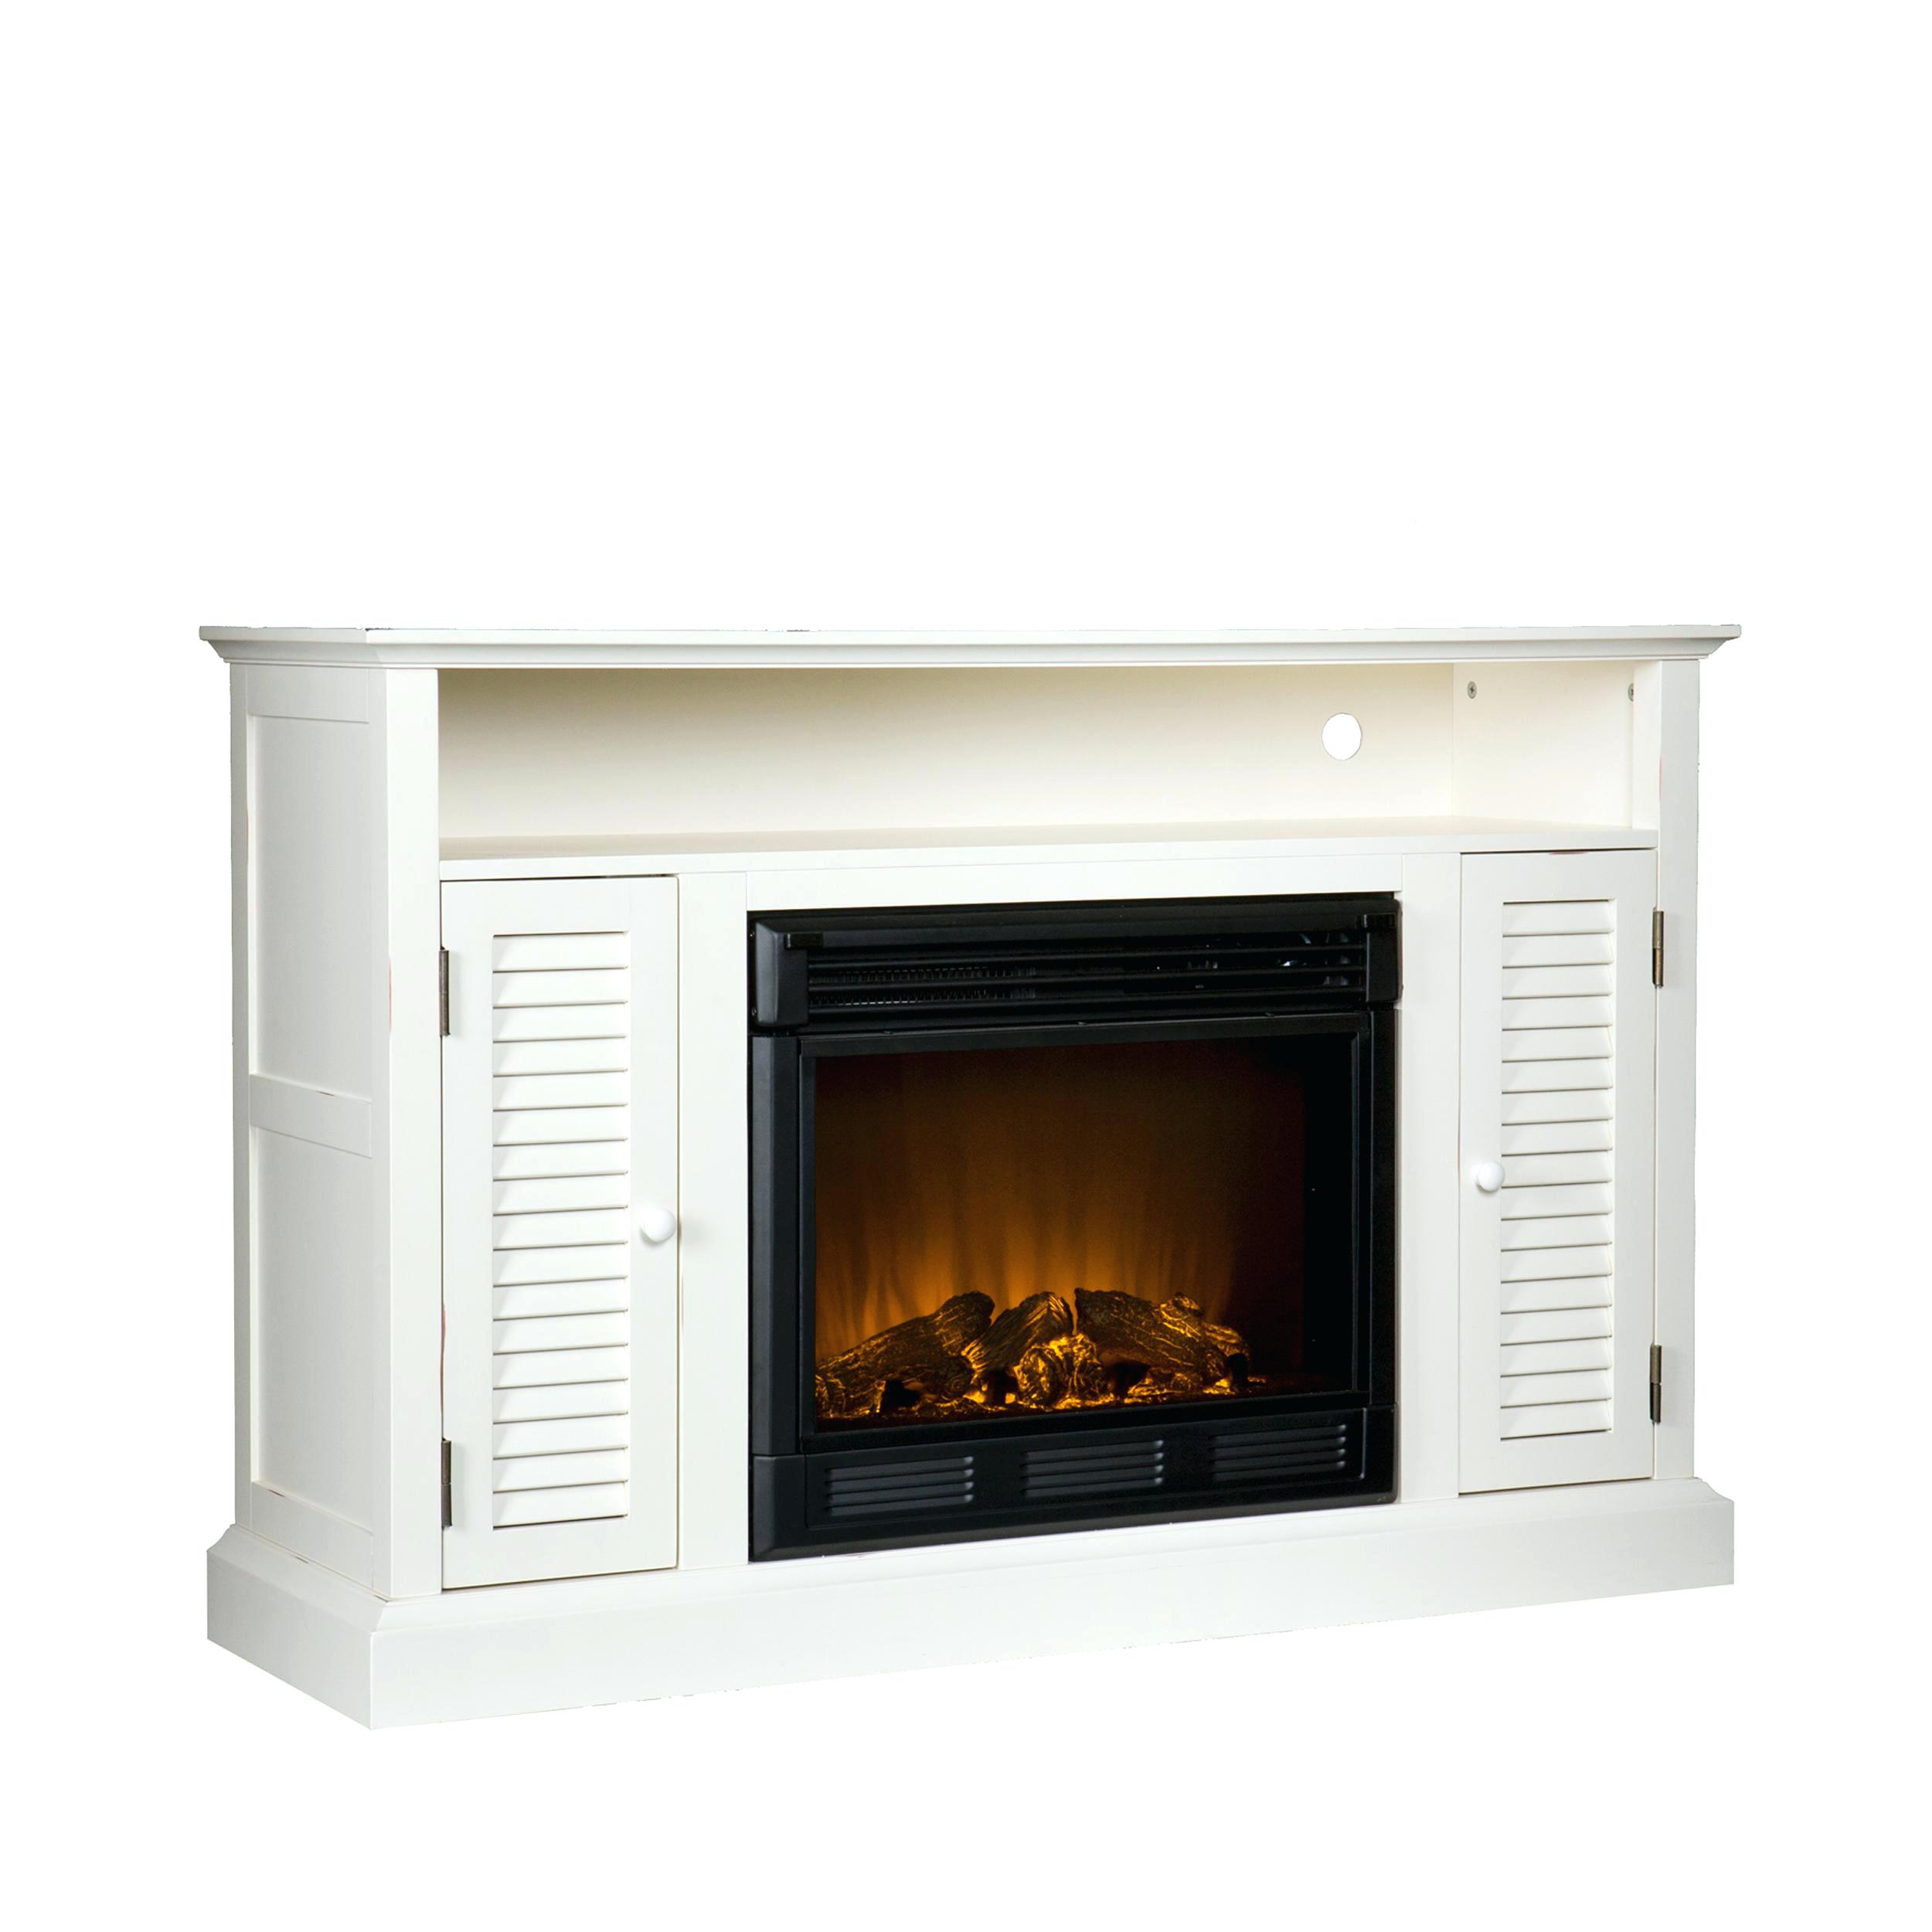 Fireplace thermopile Elegant Ventless Fireplace Gas Valve